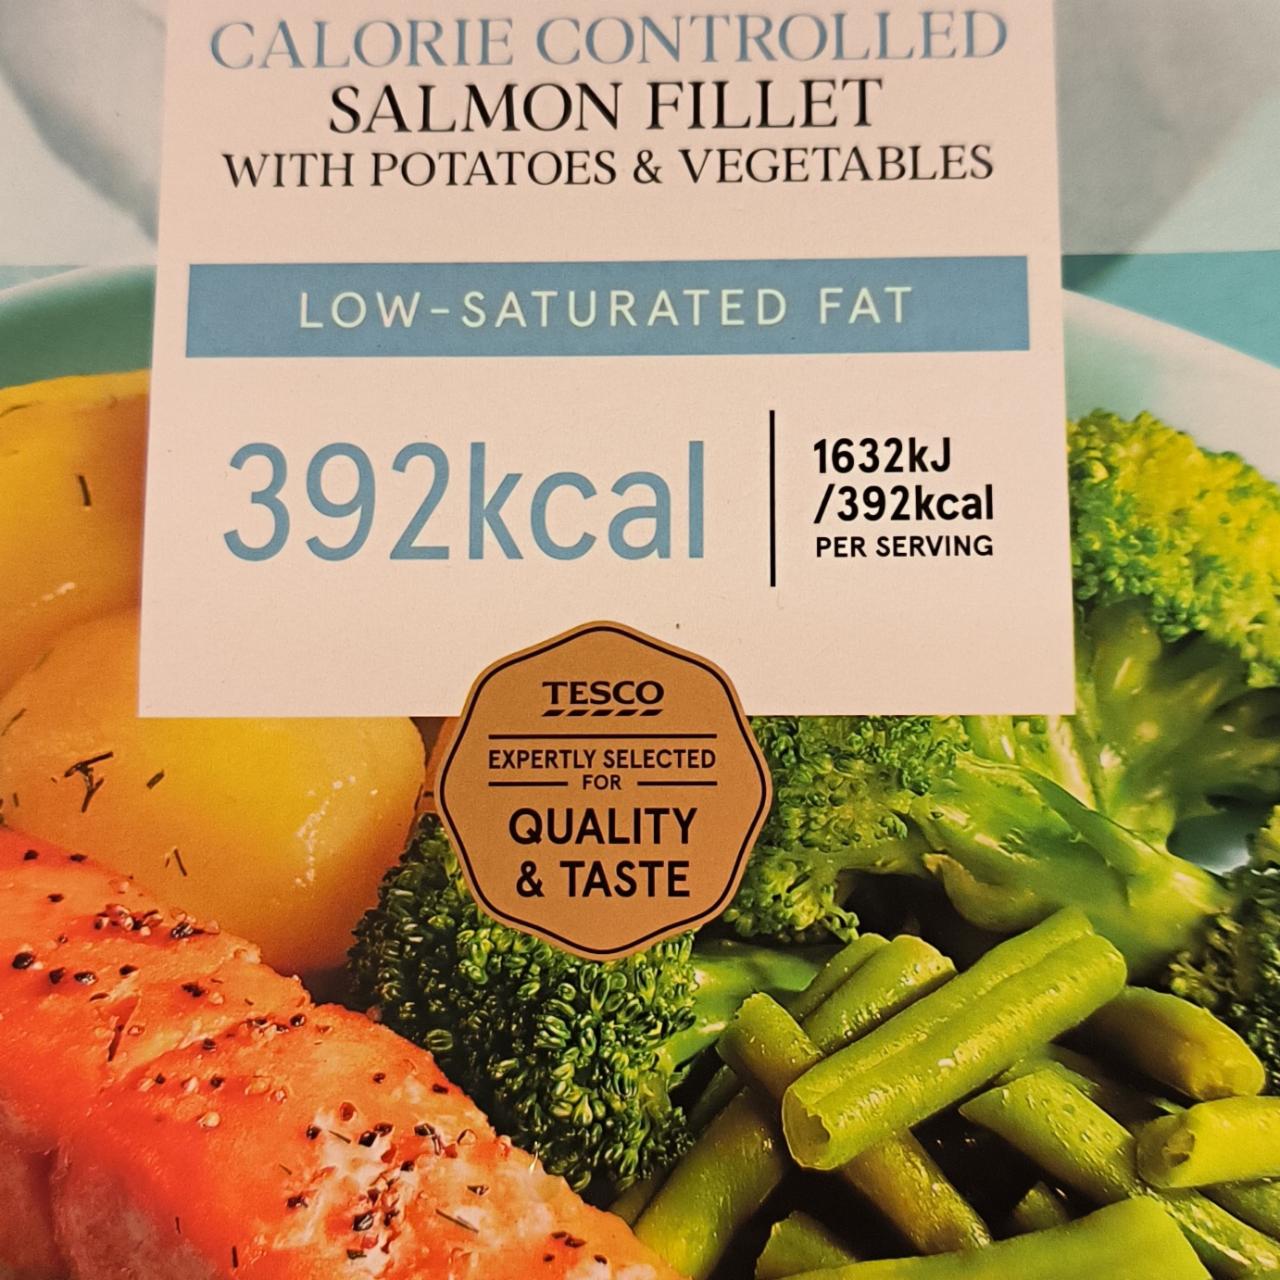 Képek - Calorie controlled Salmon Fillet with Potatoes & Vegetables Tesco